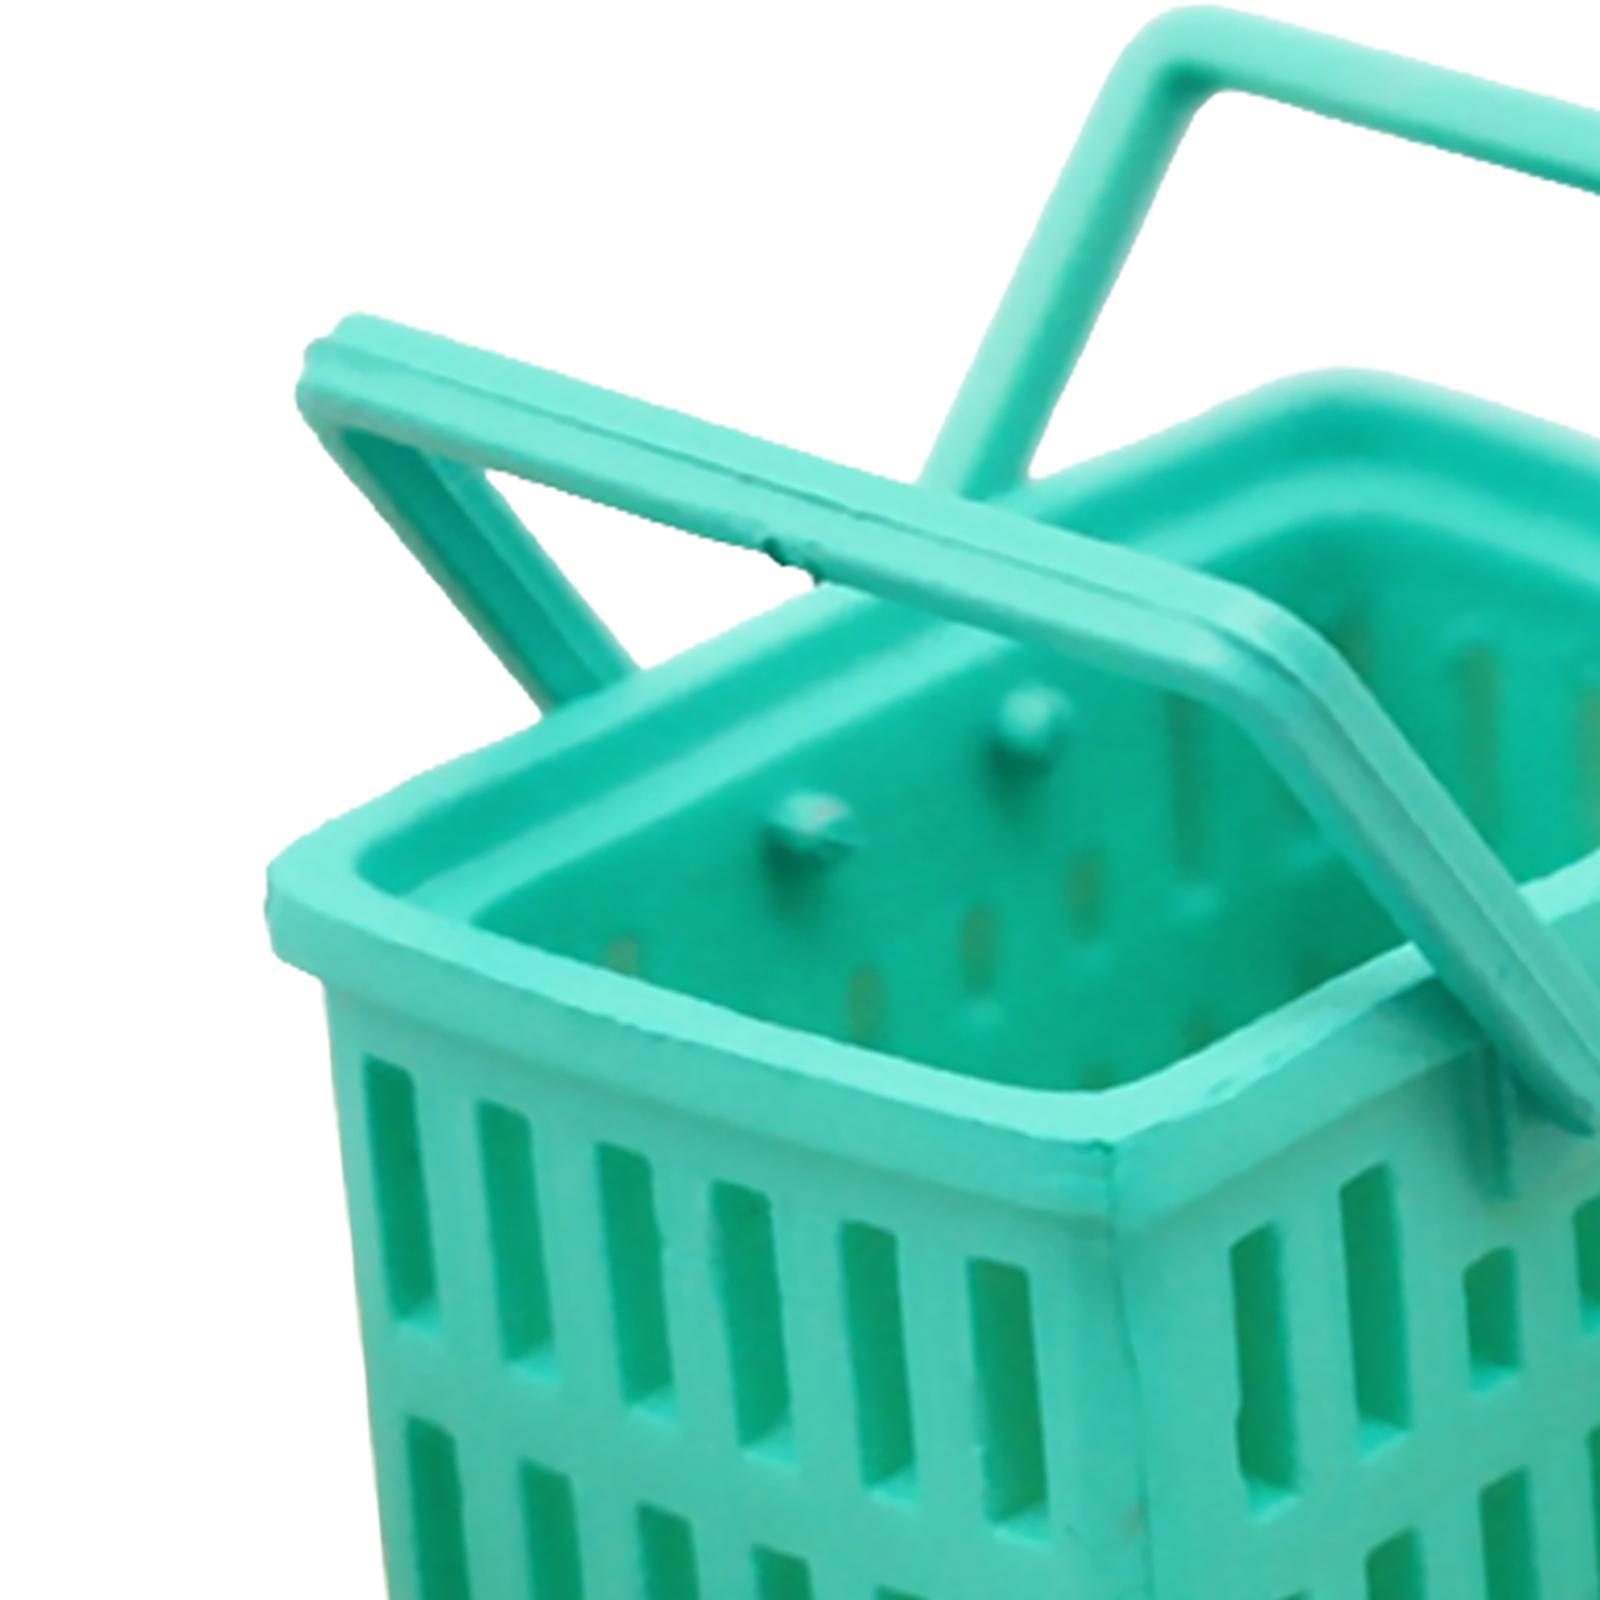 Dollhouse Miniature Shopping Baskets Mini Supermarket Basket Model for Green